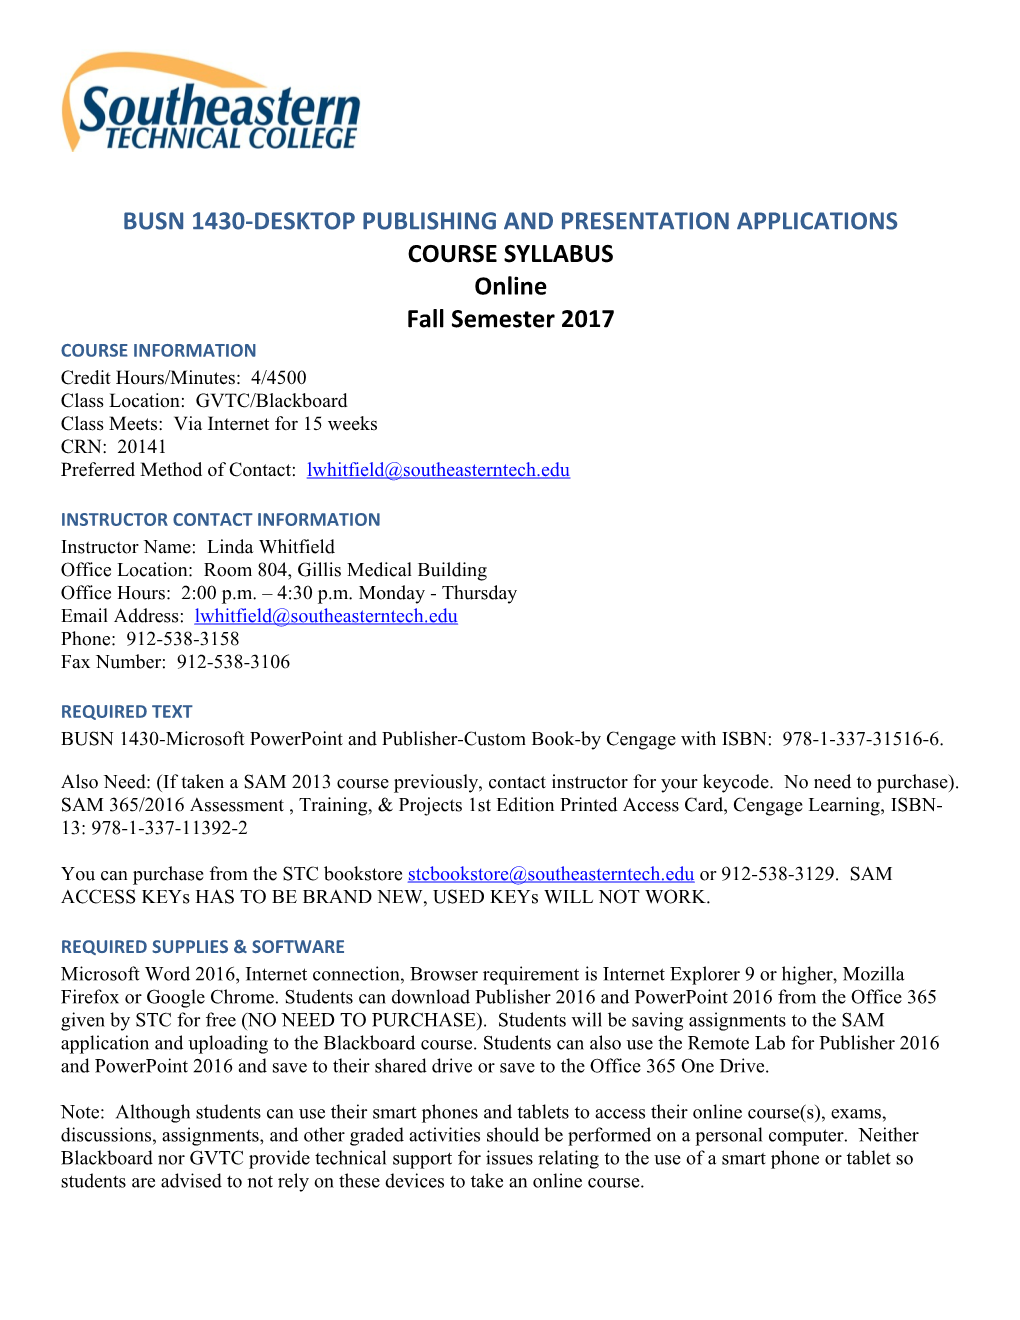 Busn 1430-Desktop Publishing and Presentation Applications